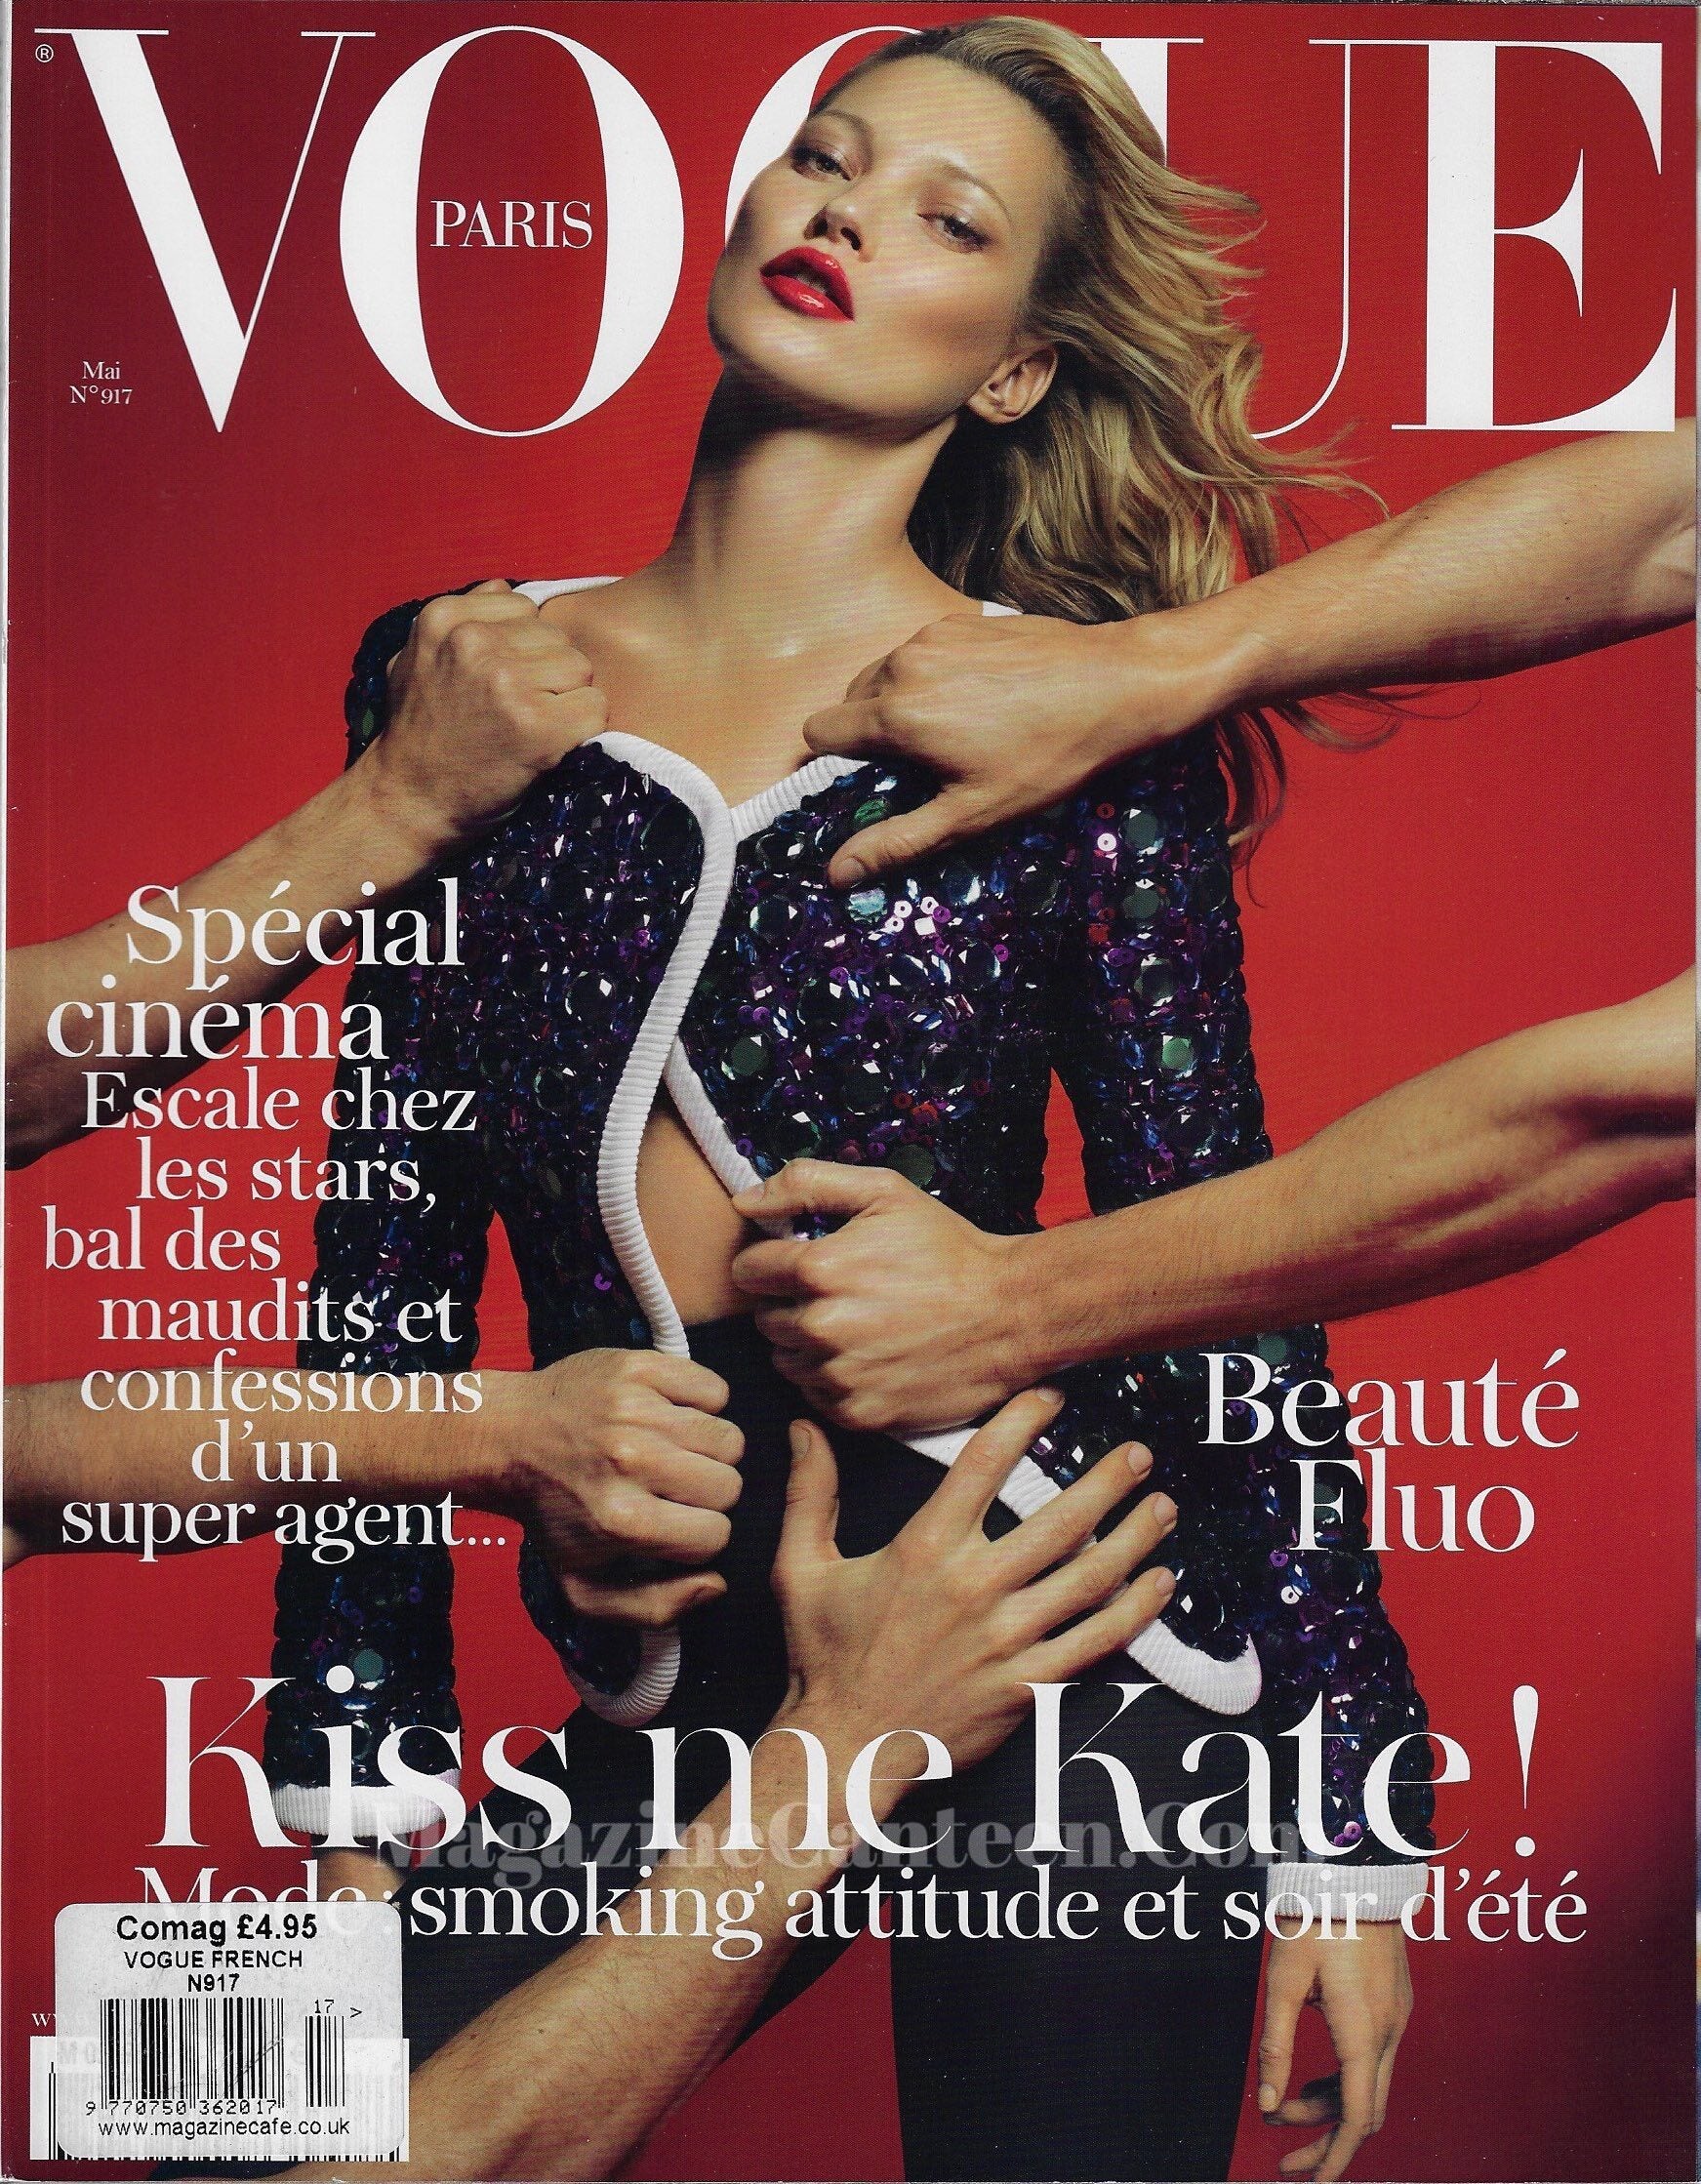 Vogue Paris Magazine 2011 - Kate Moss